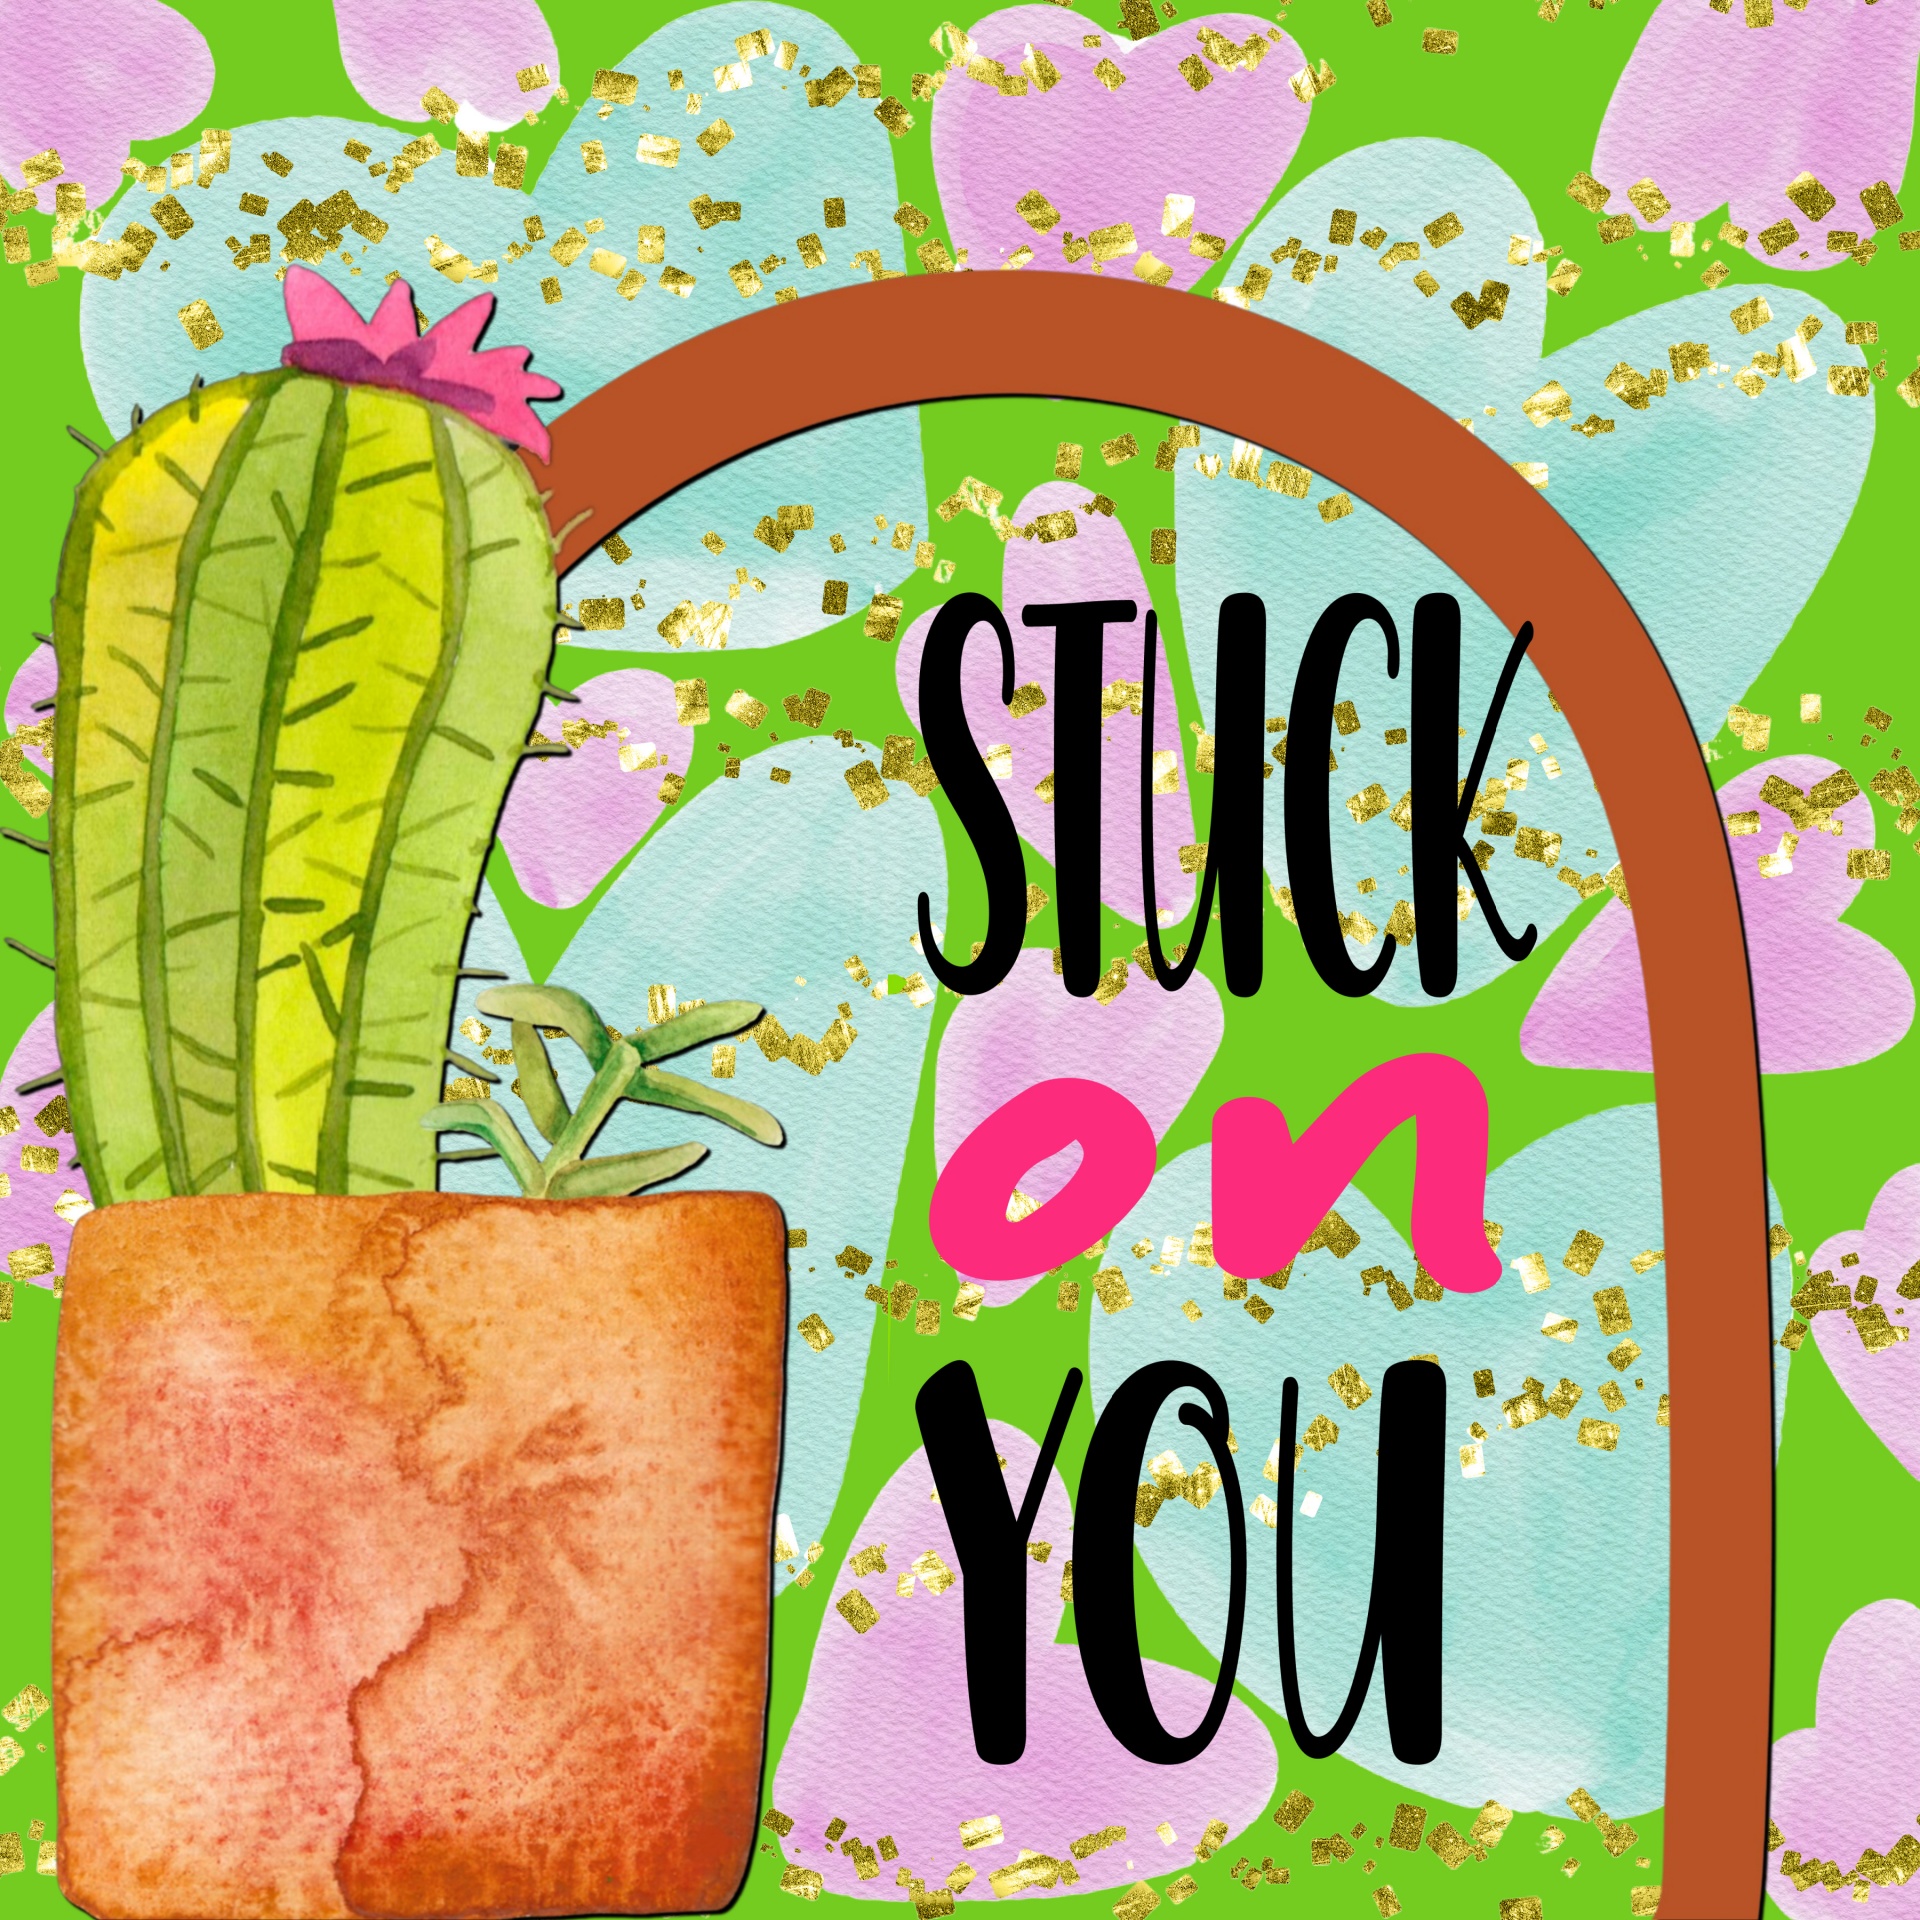 Valentine Cactus Stuck On You